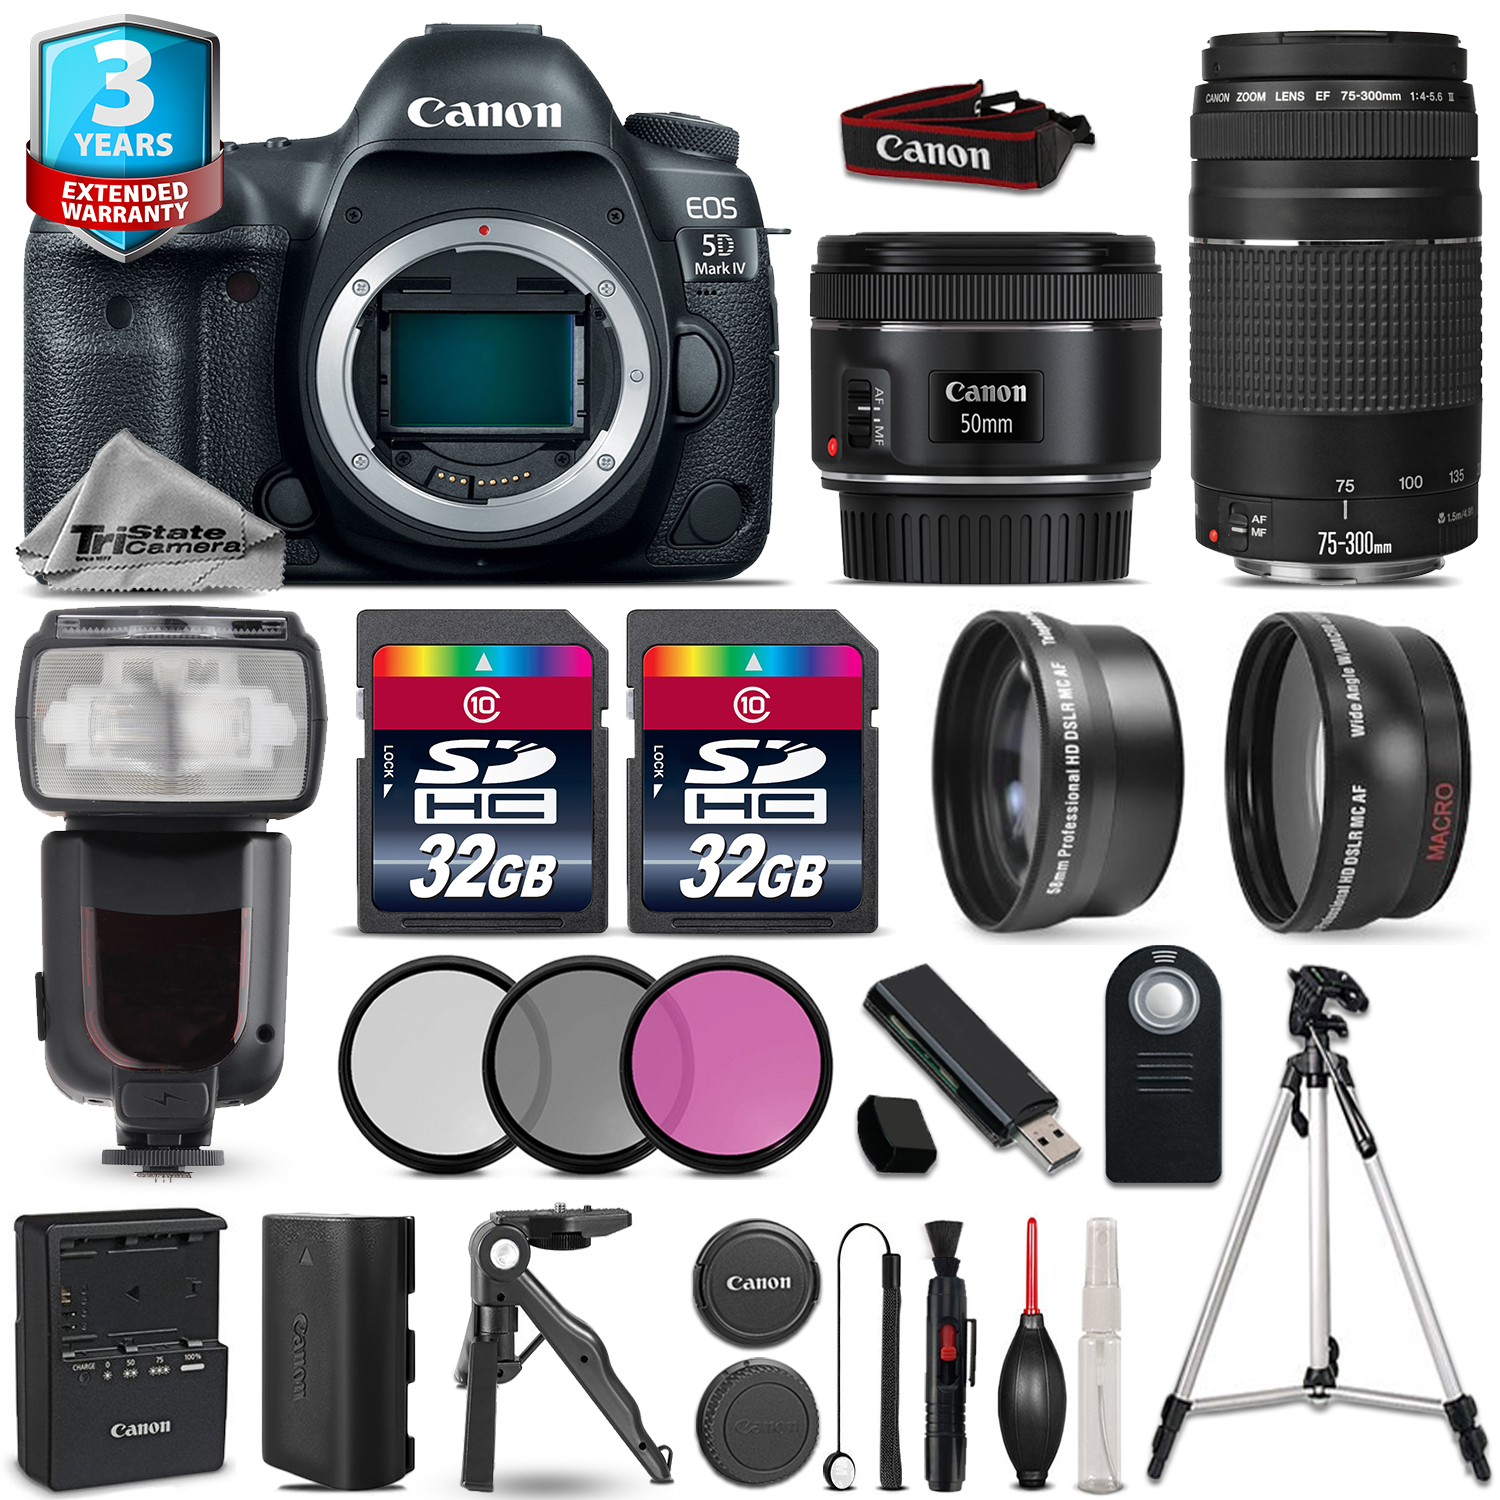 Canon EOS 5D Mark IV Camera + 50mm 1.8 + 75-300mm + 64GB + Flash + 2yr Warranty - image 1 of 11